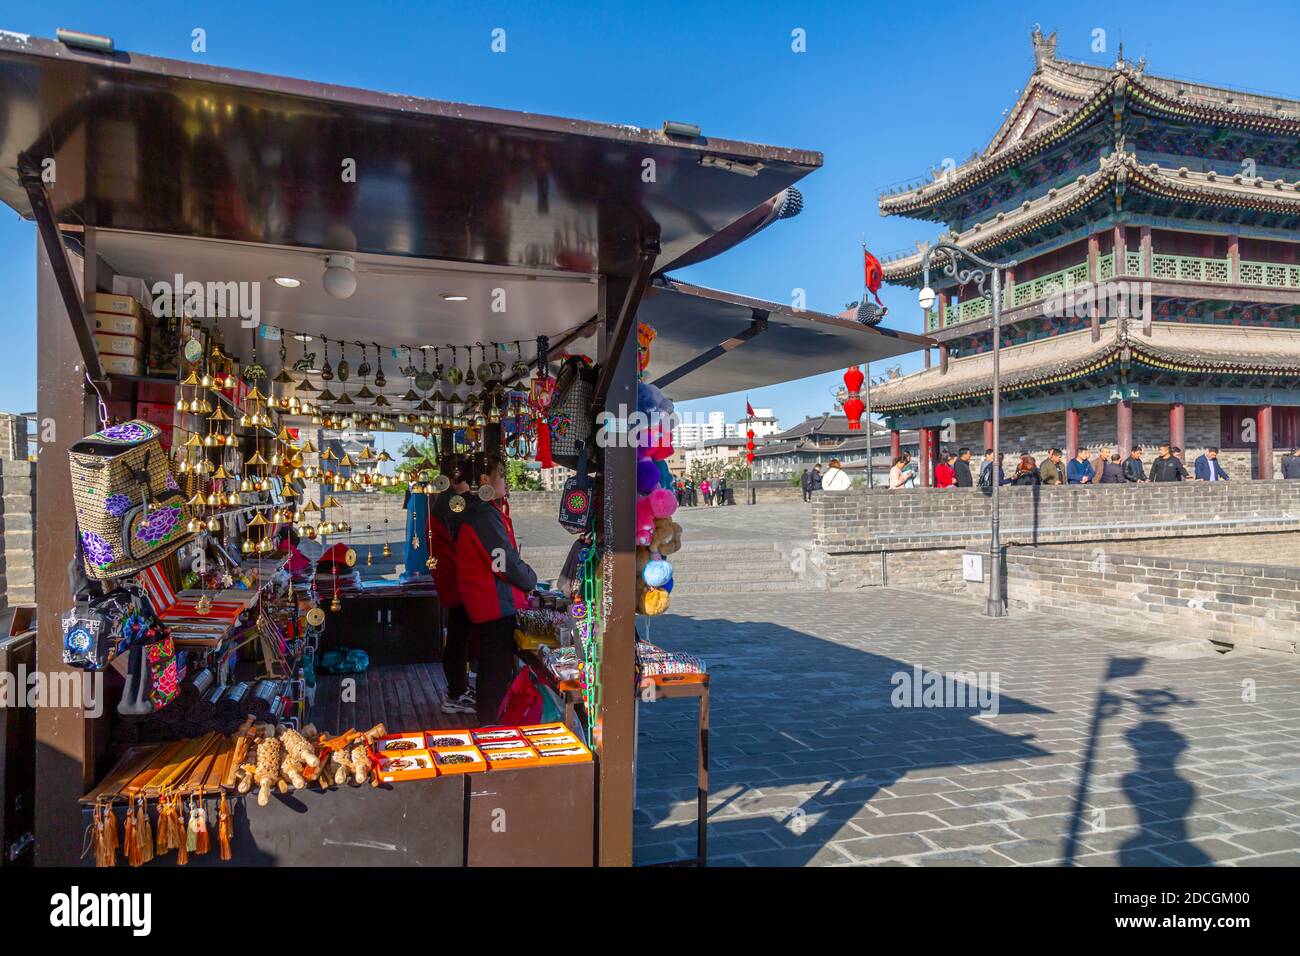 Vista de la parada del mercado en el muro de la ciudad de Xi'an, provincia de Shaanxi, República Popular de China, Asia Foto de stock